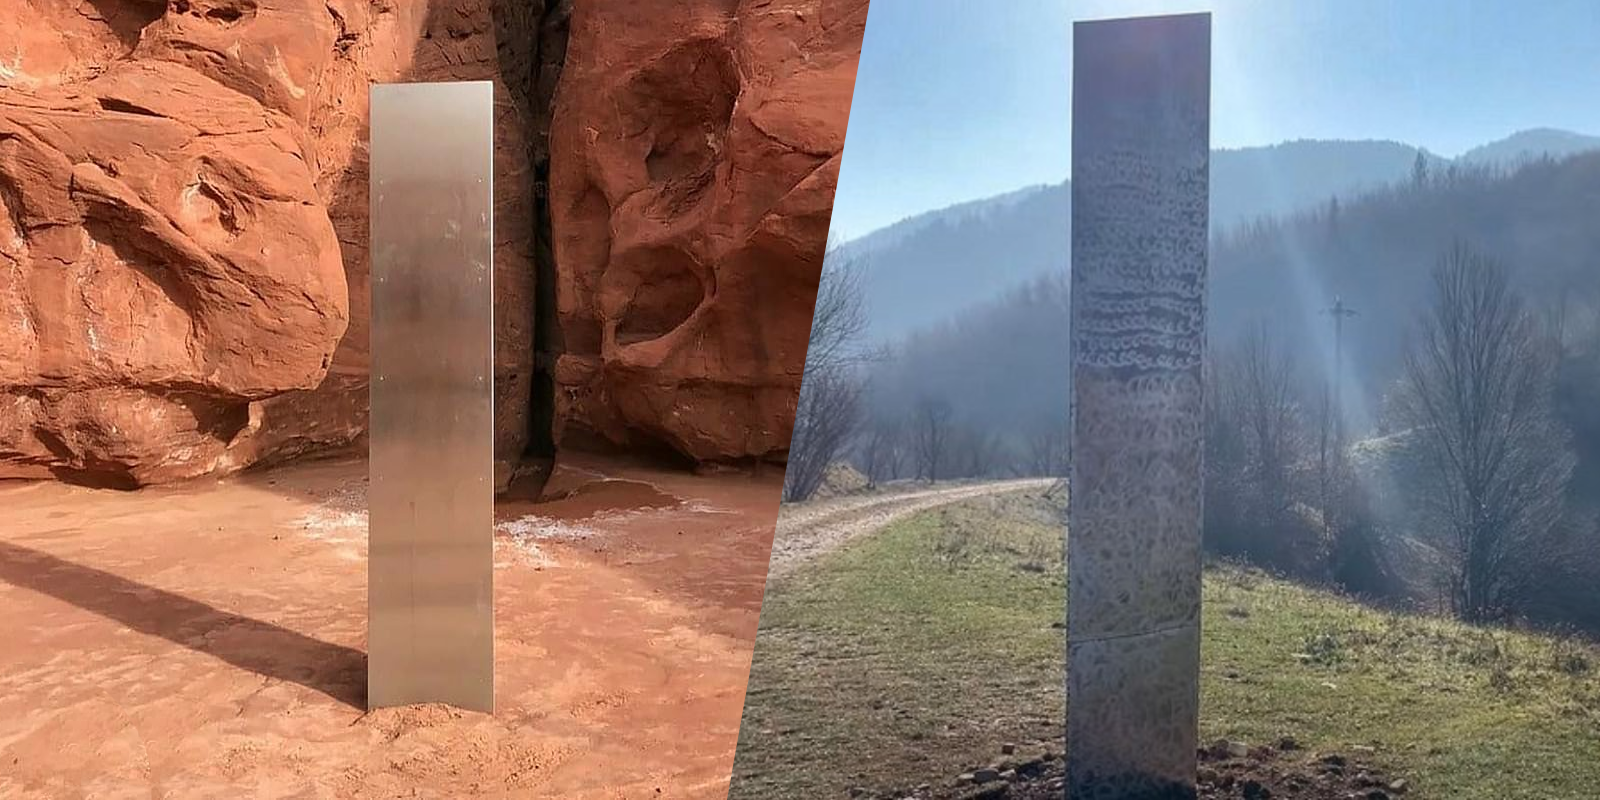 Les monolithes de l'Utah et de Roumanie. © DPS News Utah,&nbsp;Ziar Piatra Neamt